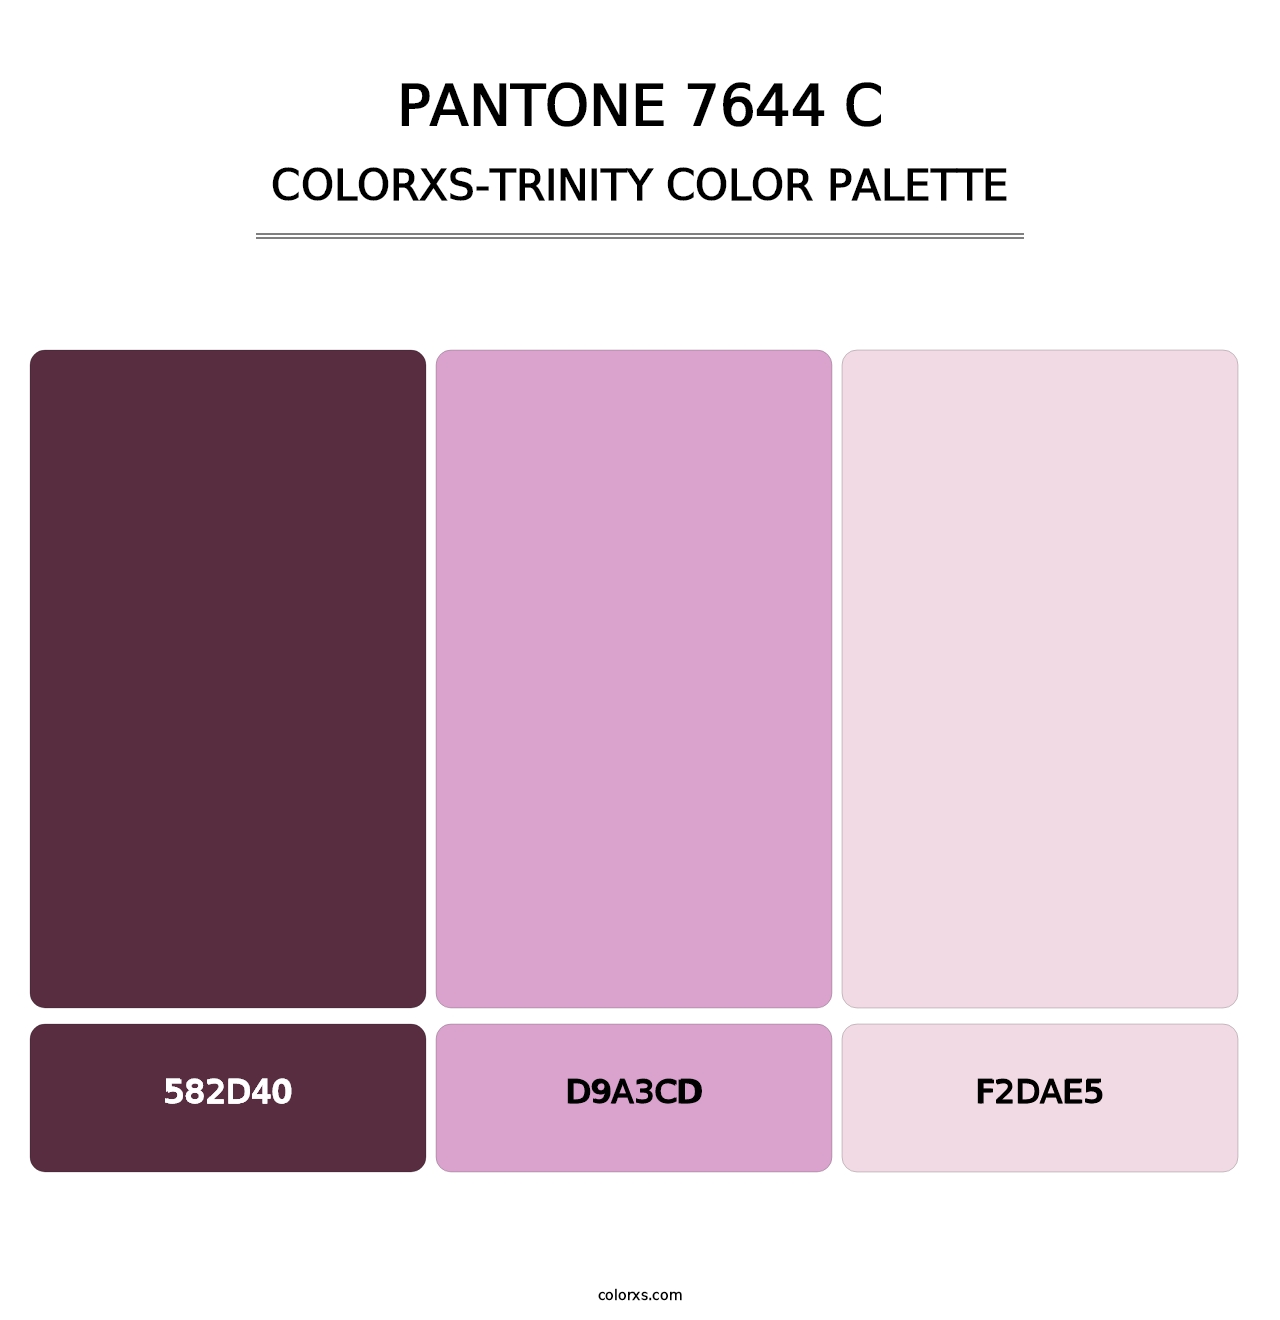 PANTONE 7644 C - Colorxs Trinity Palette